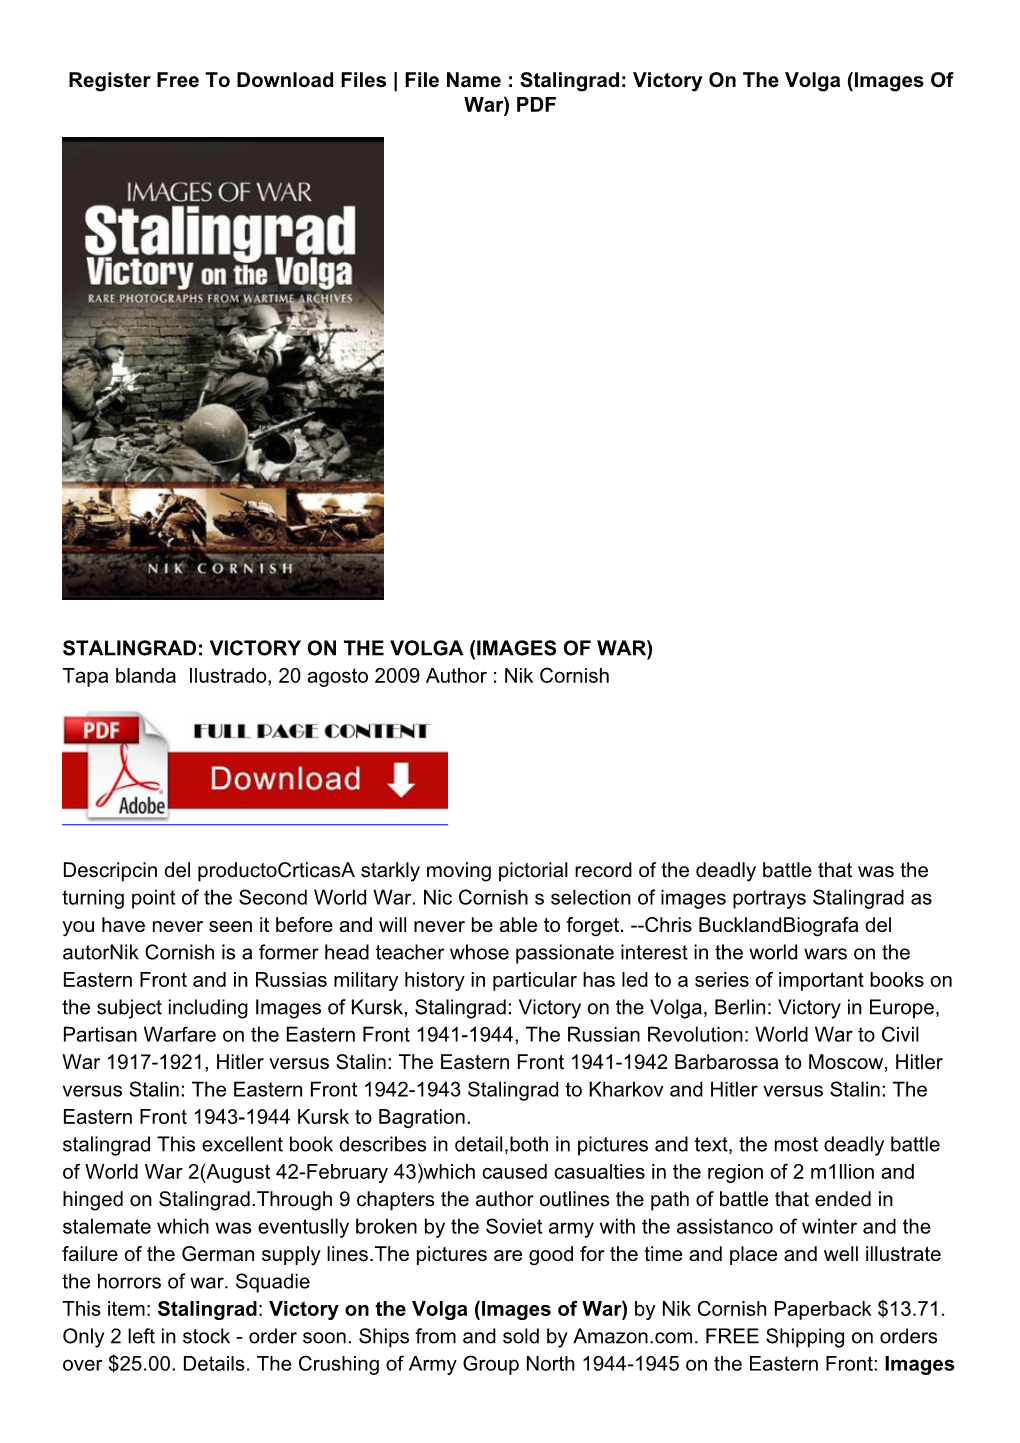 [MFH] Libro Free Stalingrad: Victory on the Volga